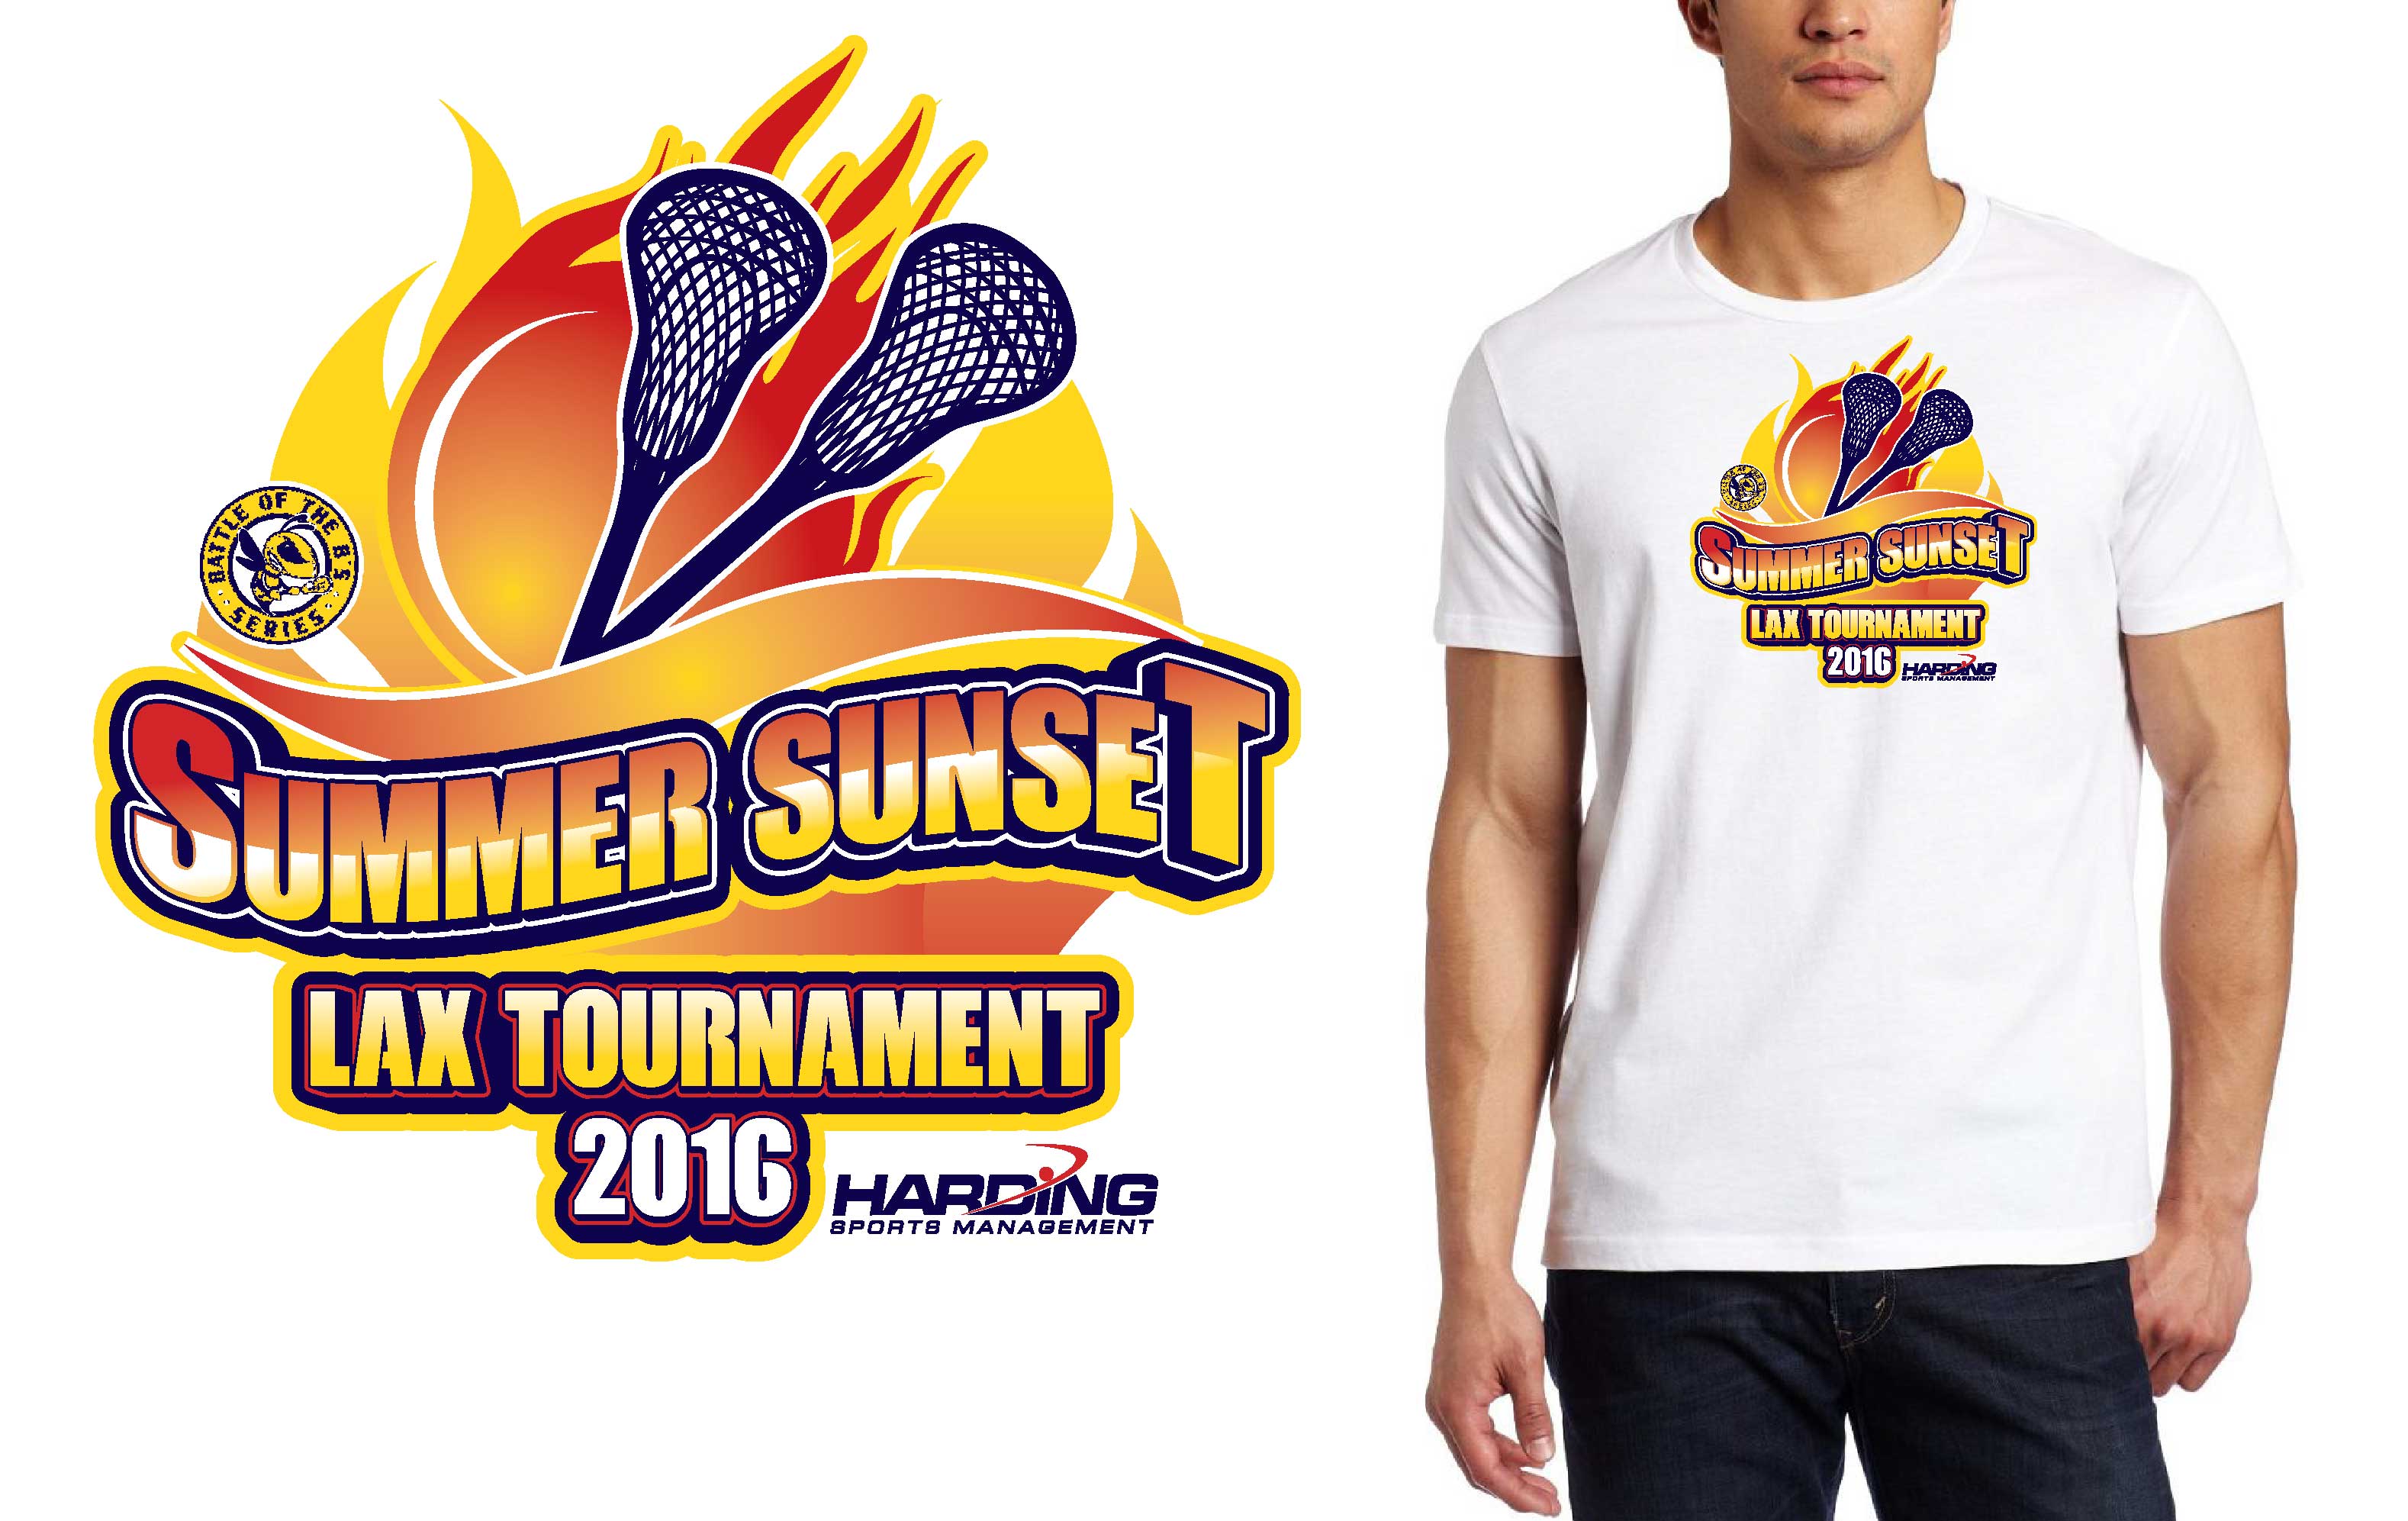 Cool Lacrosse Logo - Cool vector logo design for July 23 2016 Summer Sunset Lax ...